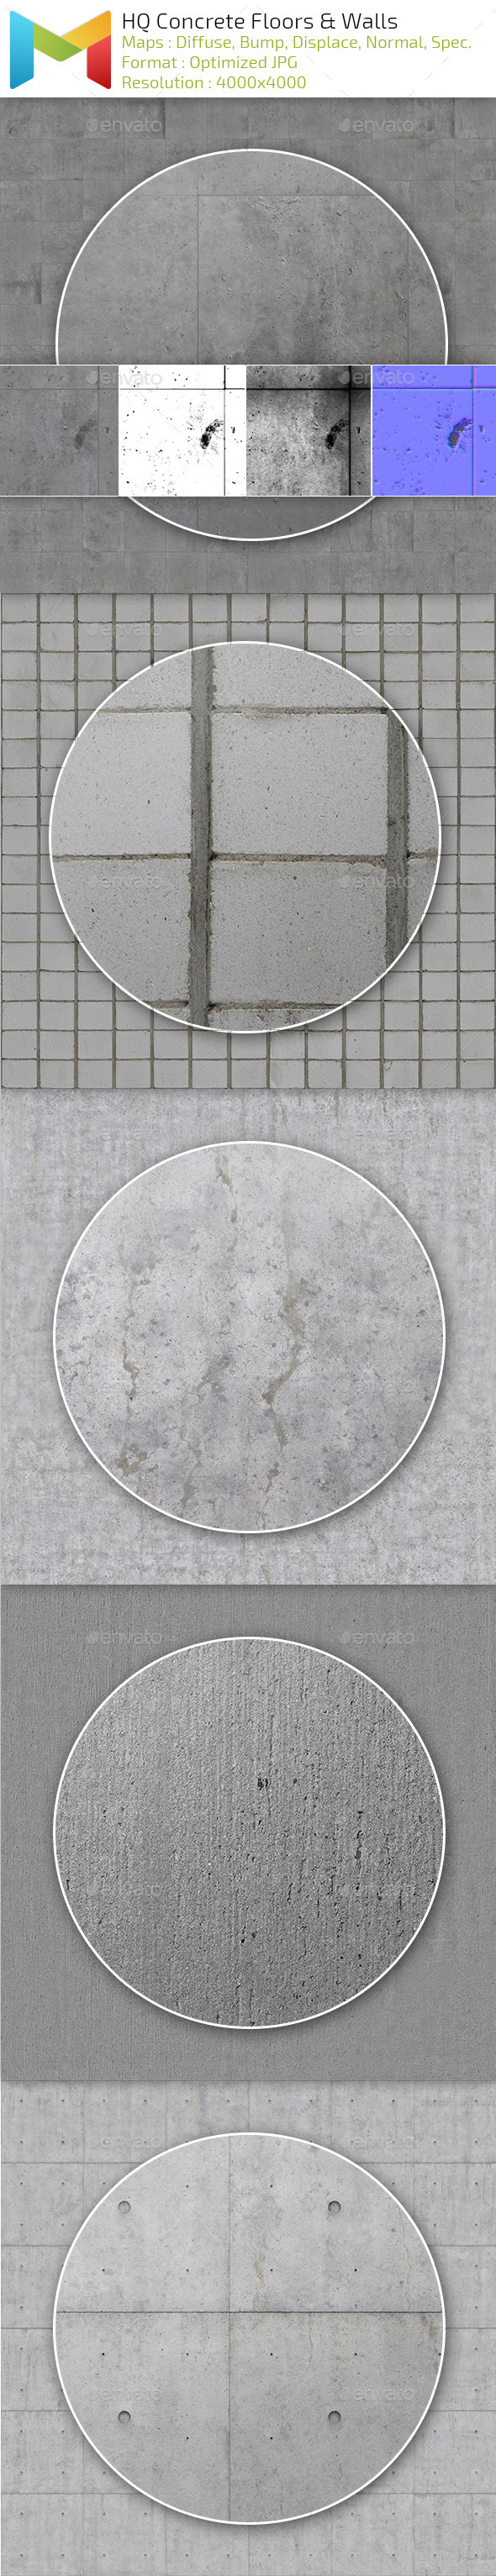 Concrete Floors and - 3Docean 13250519